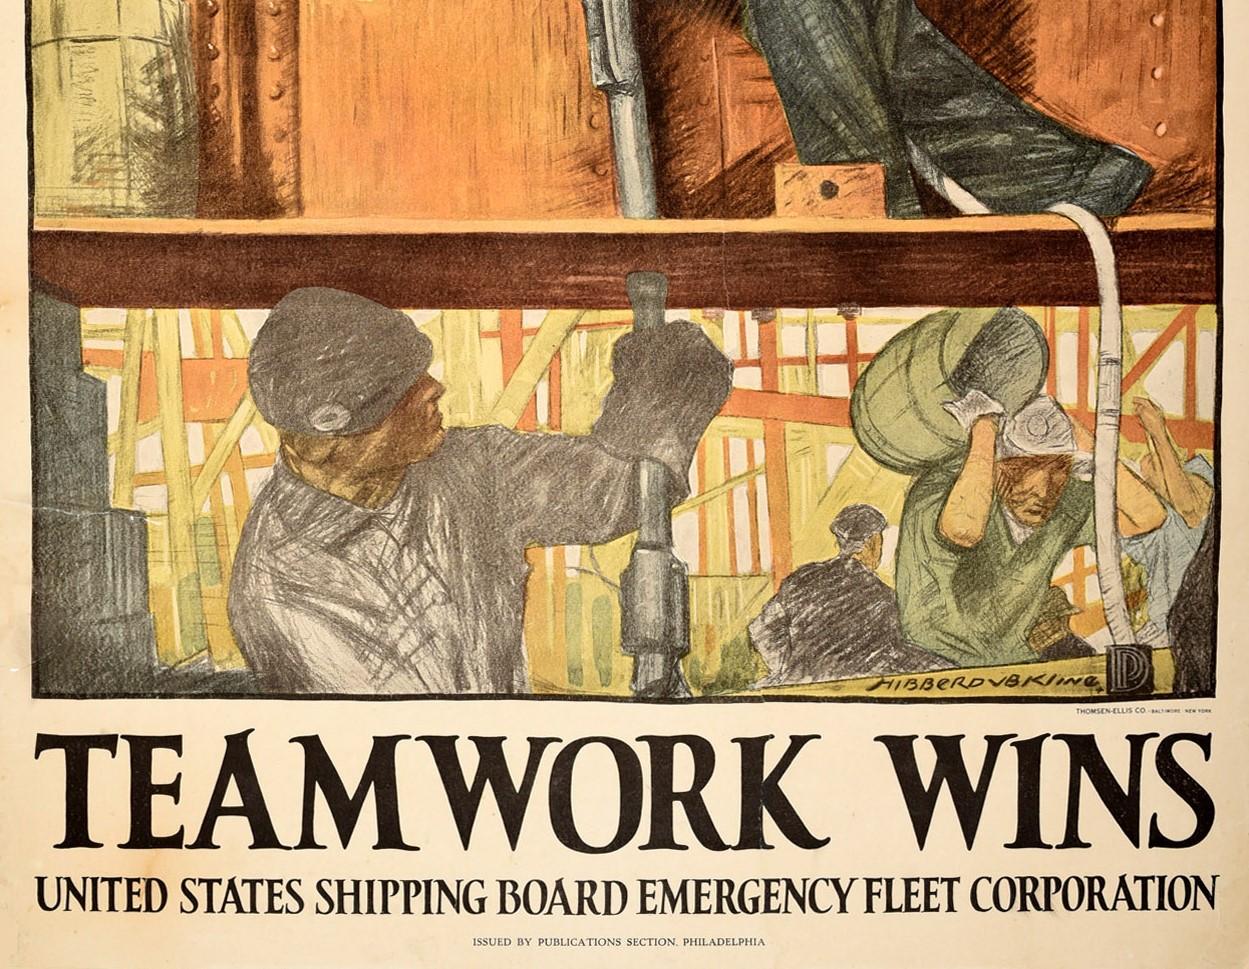 war industries board propaganda poster